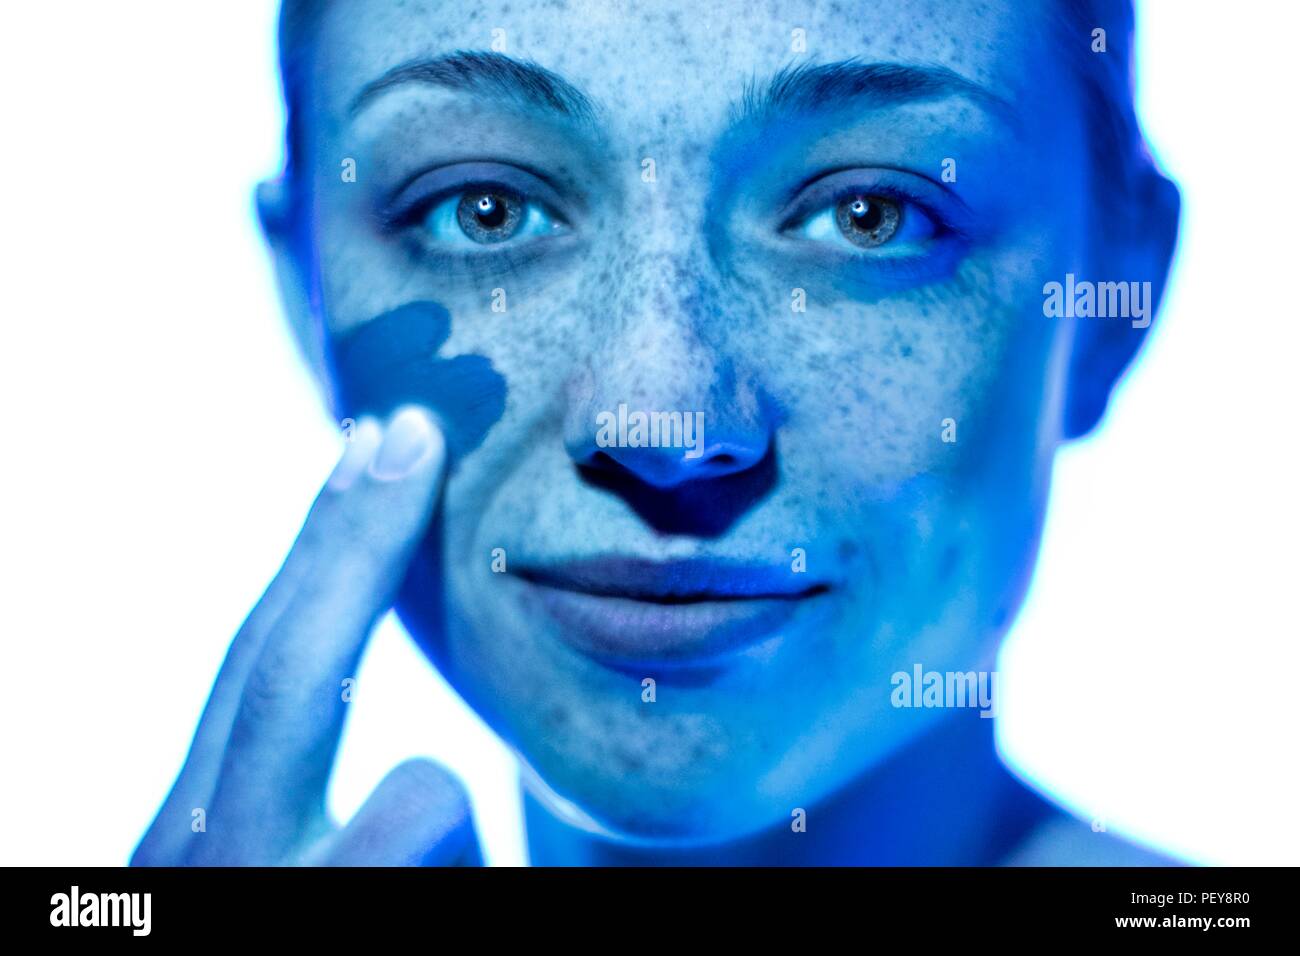 Woman applying sunscreen to her cheek. Stock Photo